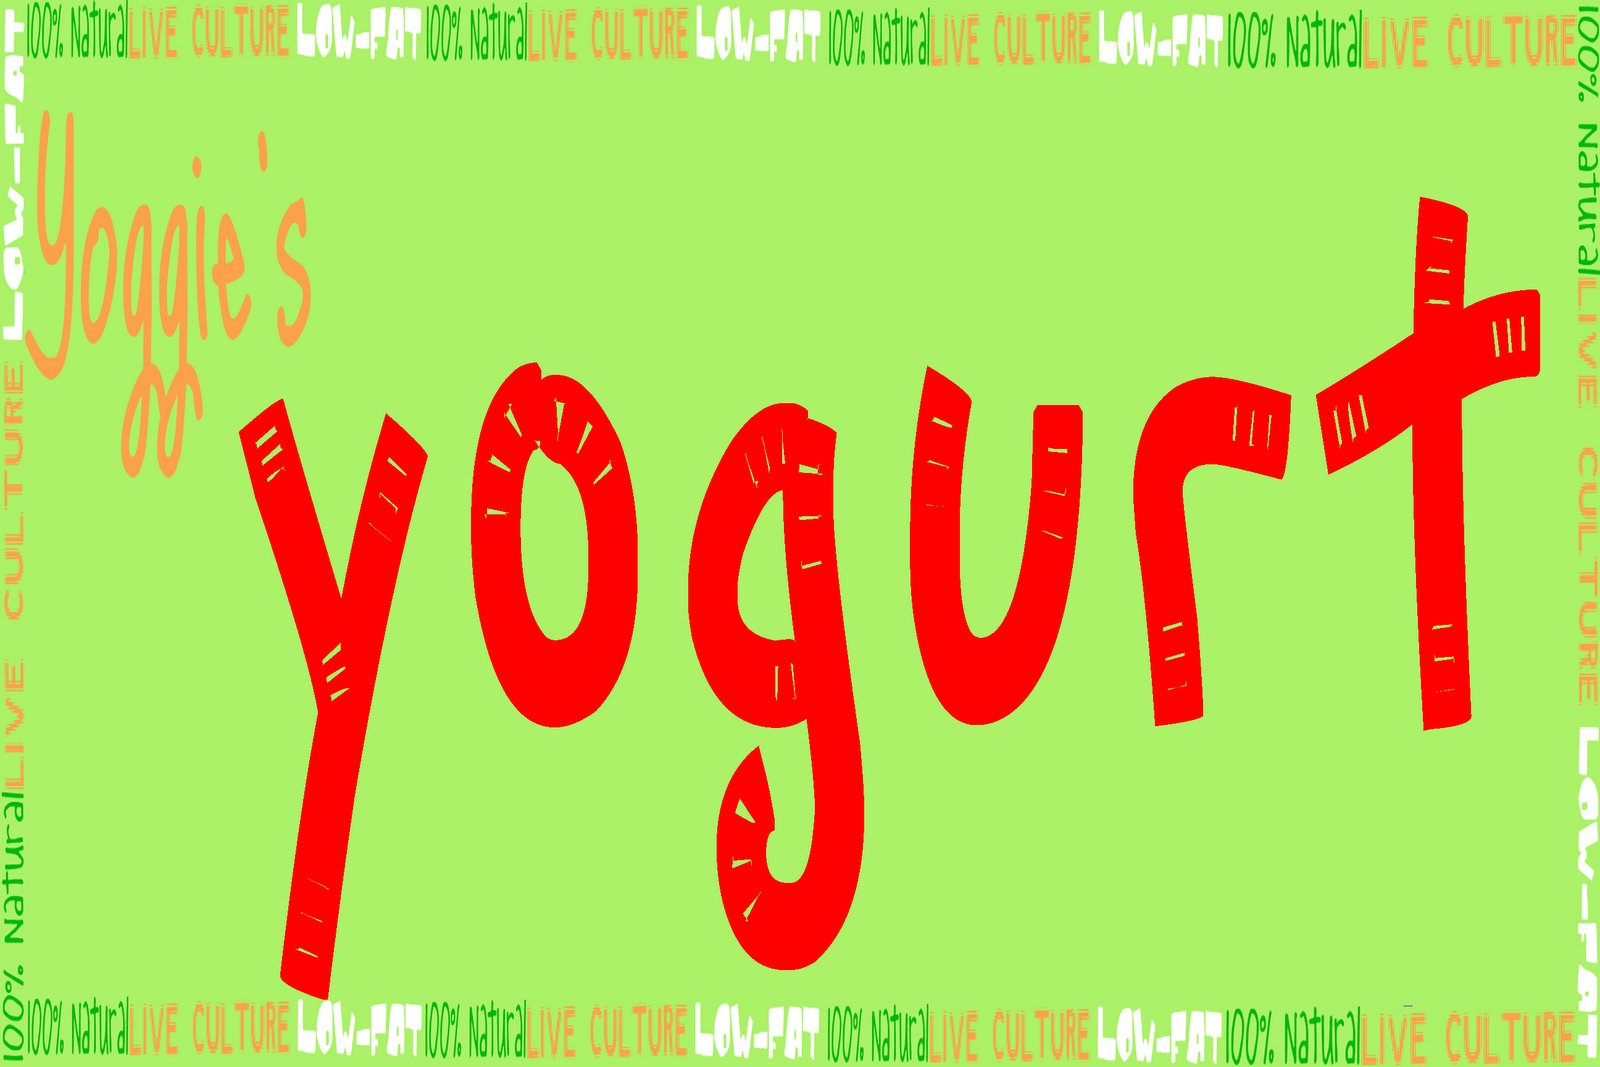 Yoggie's Yogurt by Jane